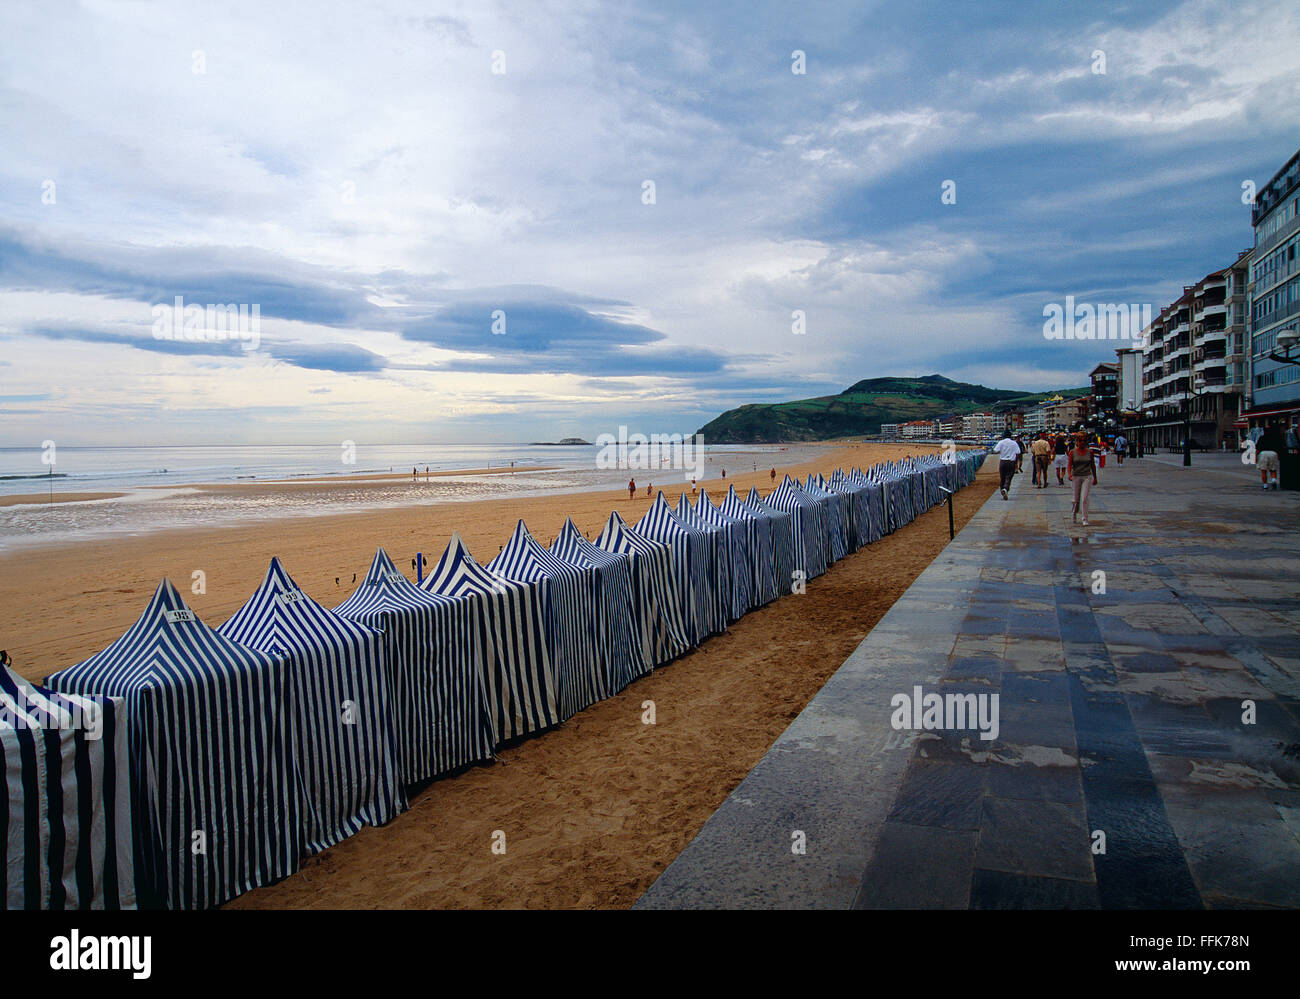 Promenade and beach. Zarauz, Guipuzcoa province, Basque Country, Spain. Stock Photo